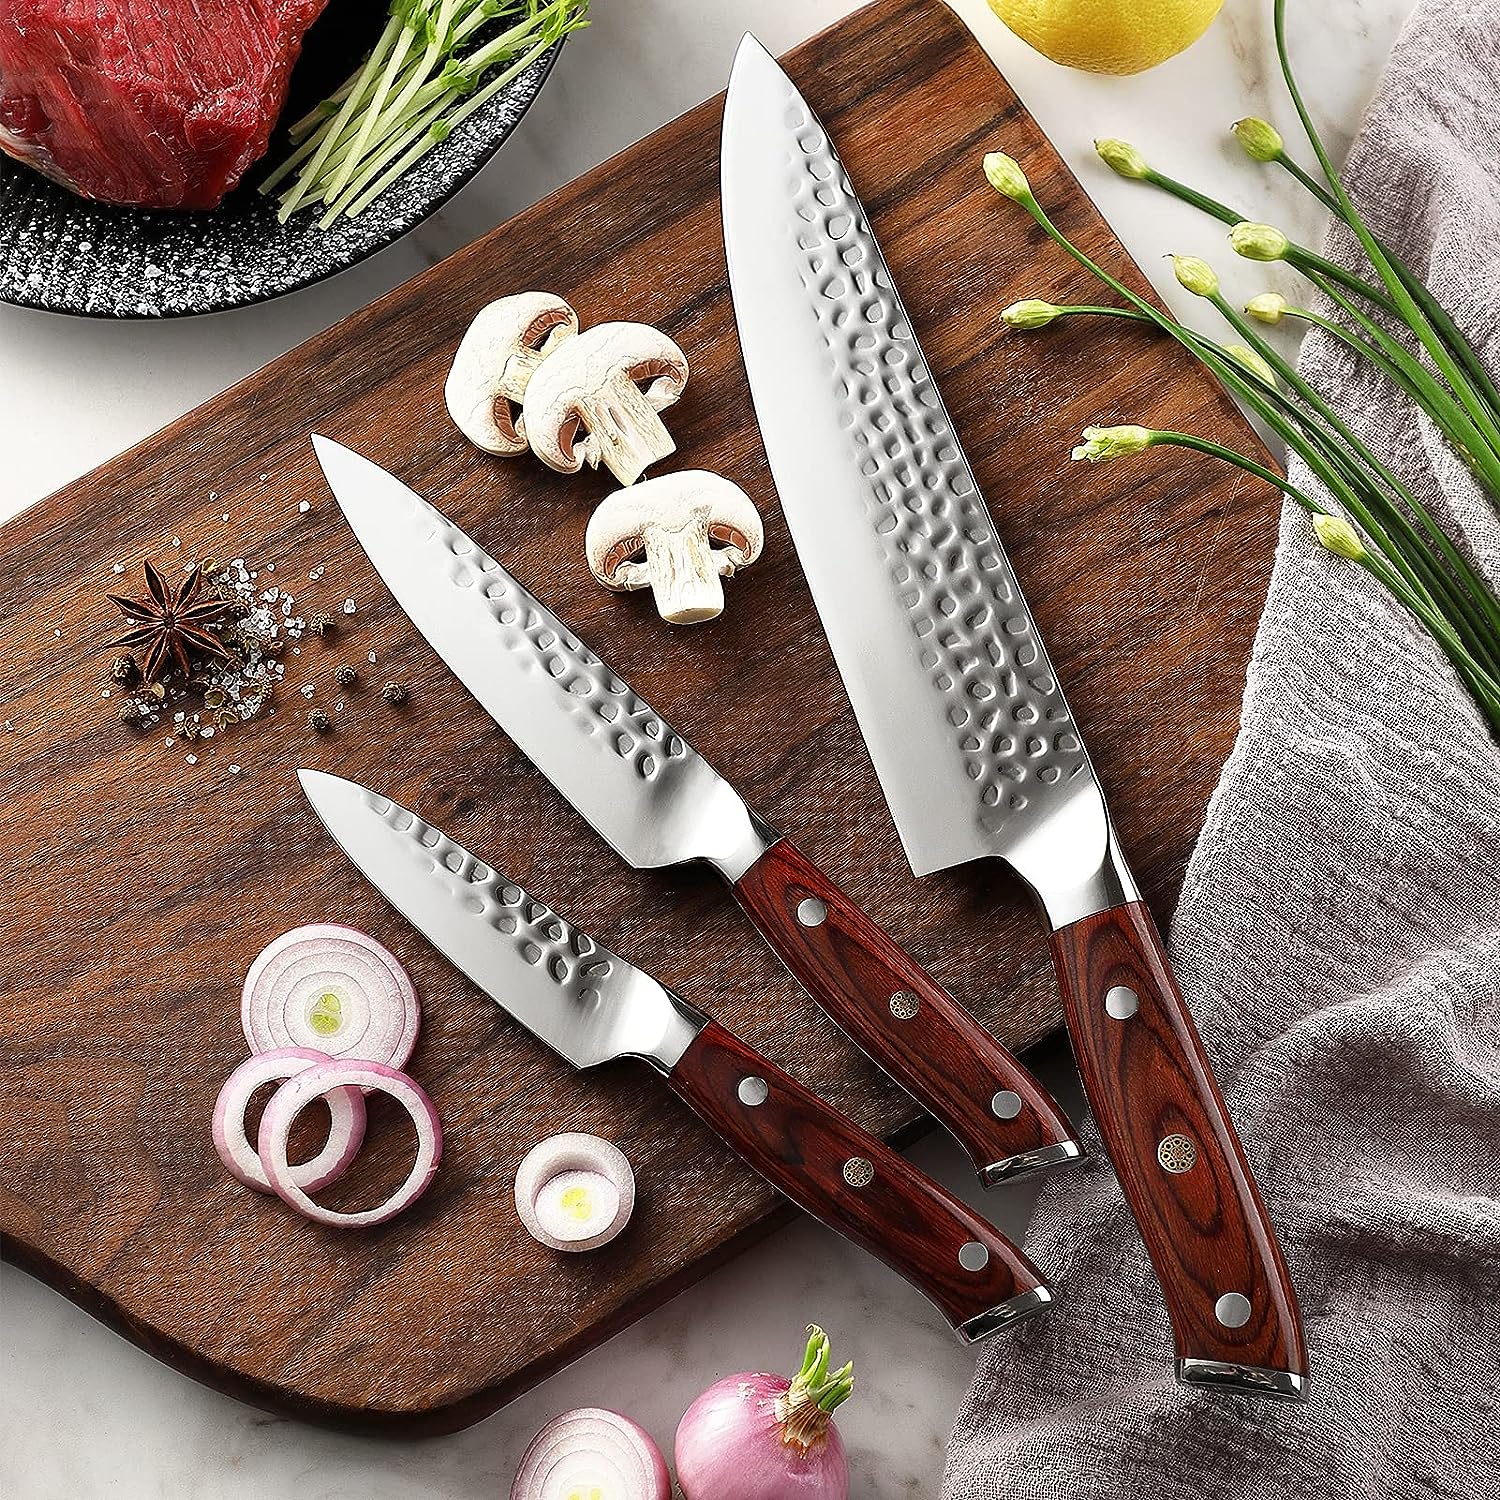 K135 Series】8 Chef's Knife 5 Kitchen Utility Knife 3.5 Paring Knif –